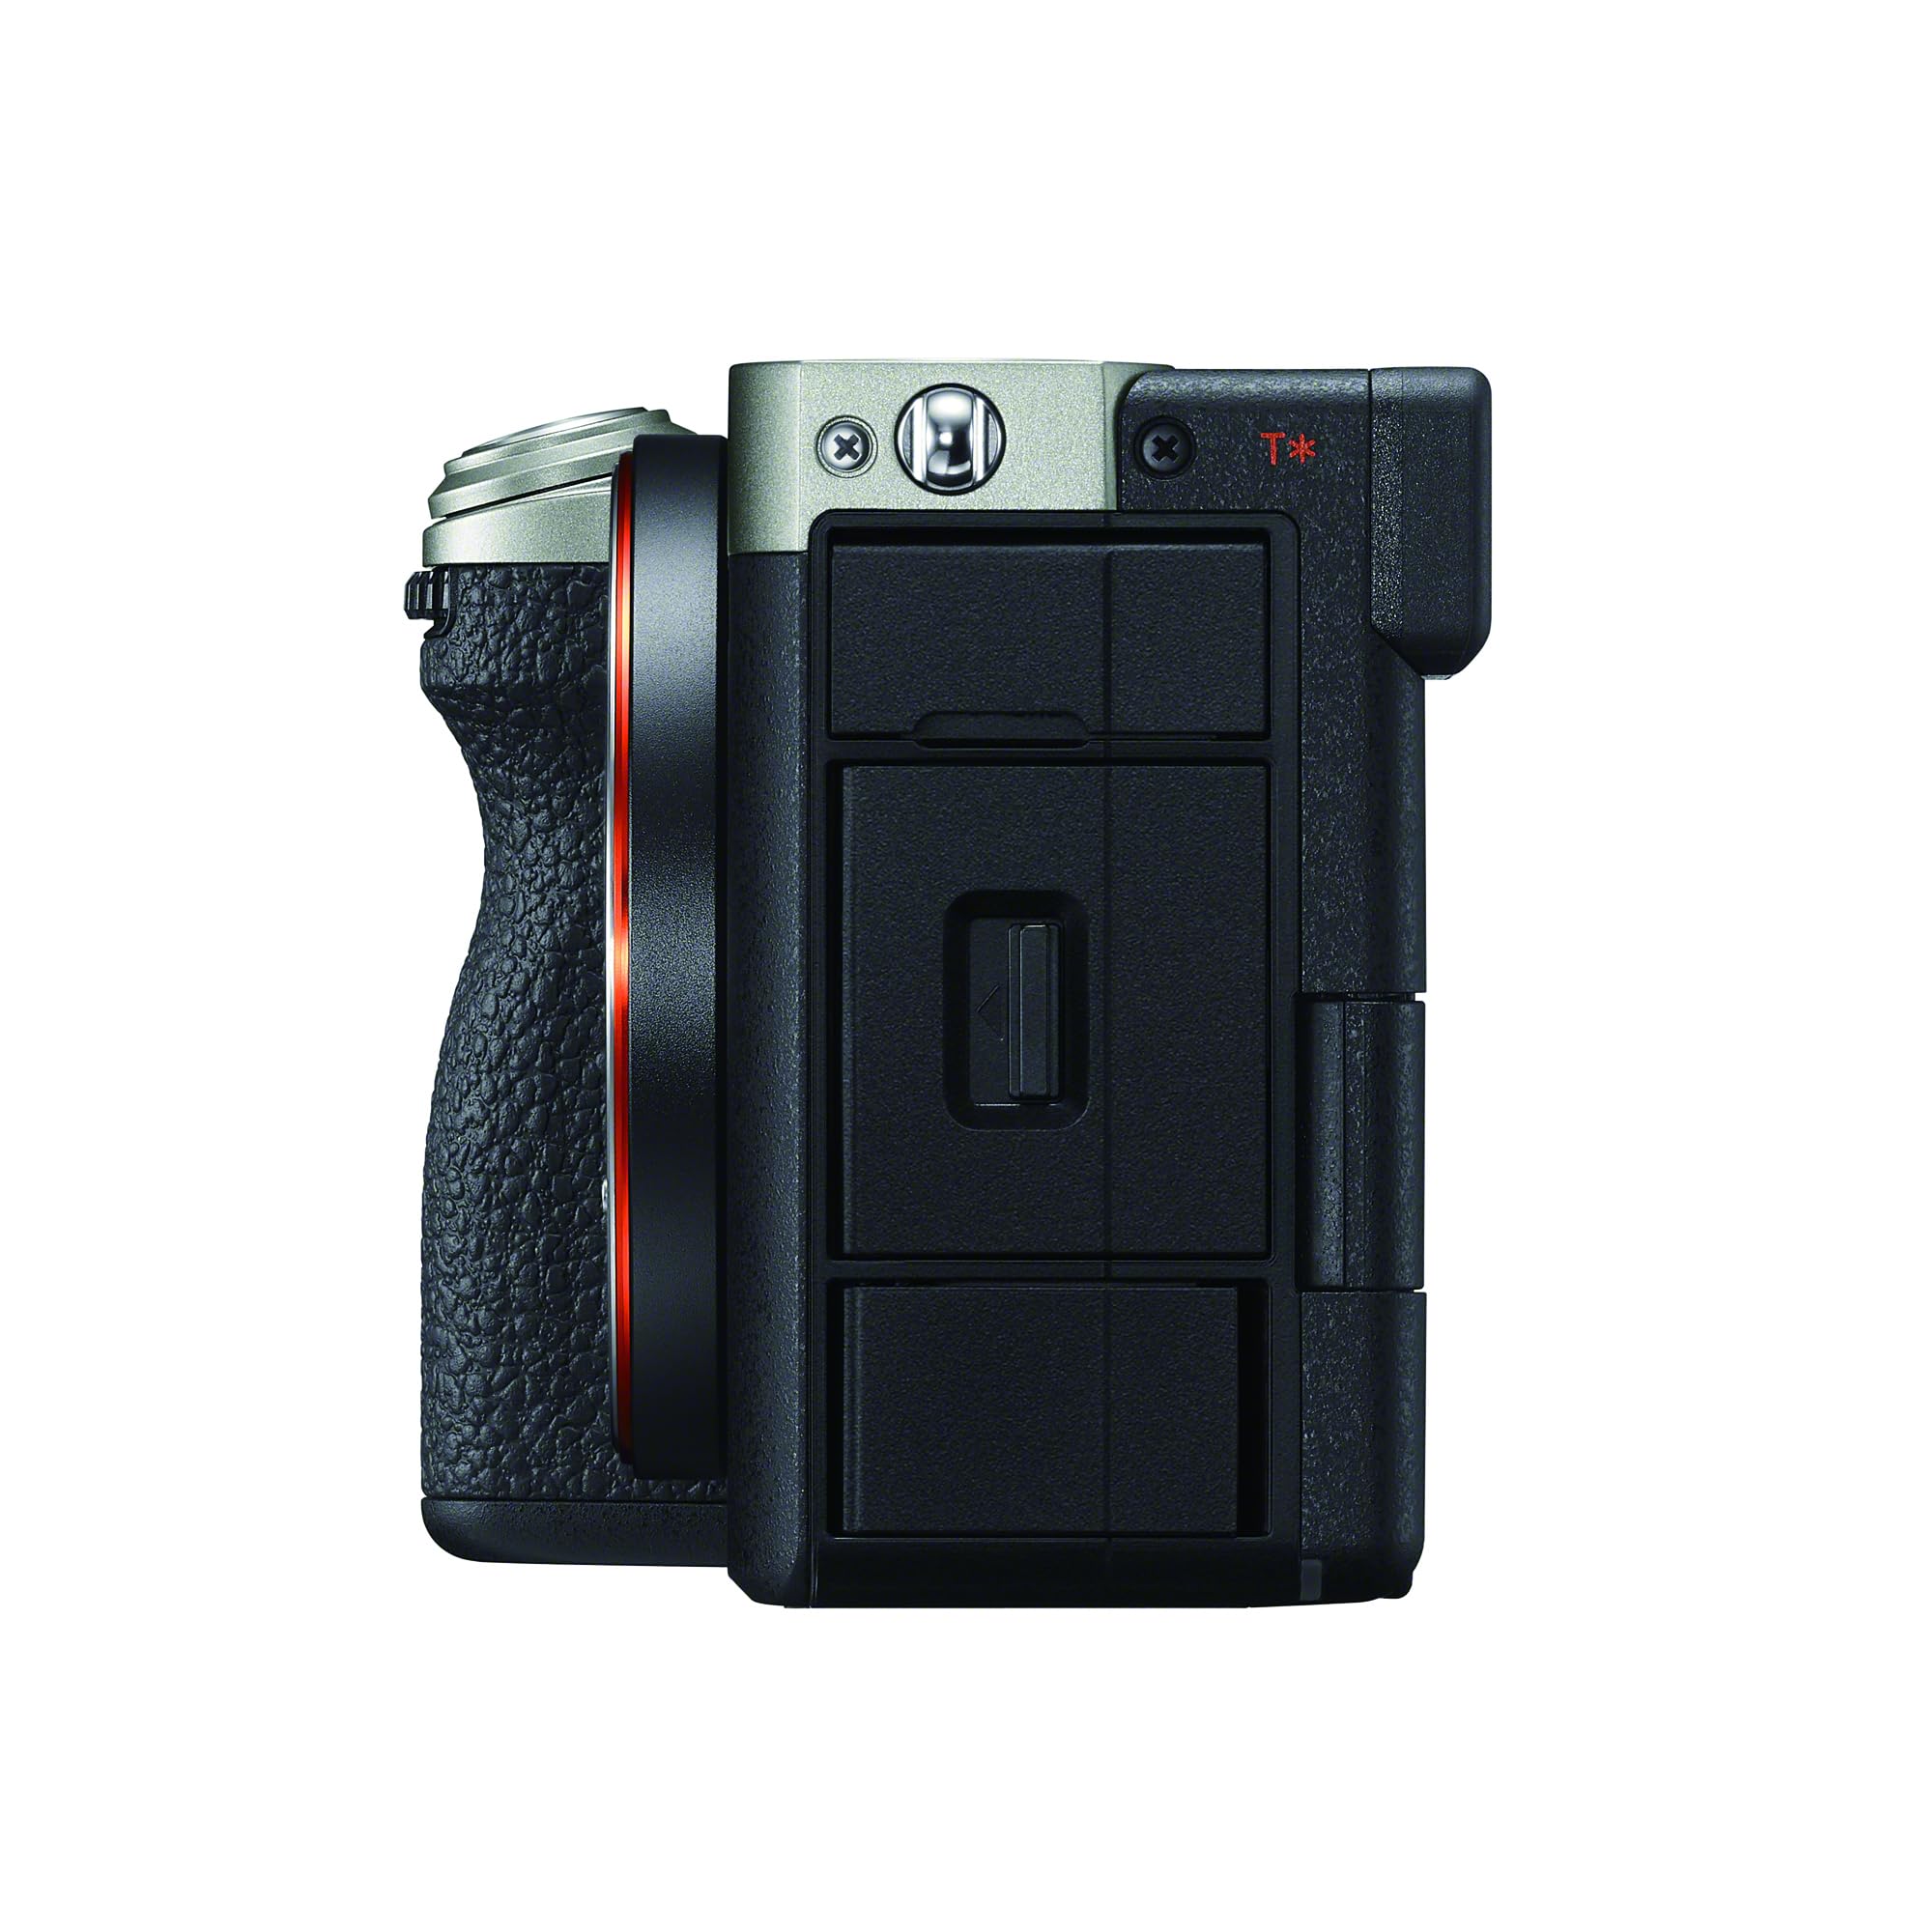 Sony Alpha 7CR Full-Frame Interchangeable Lens Hybrid Camera - Silver